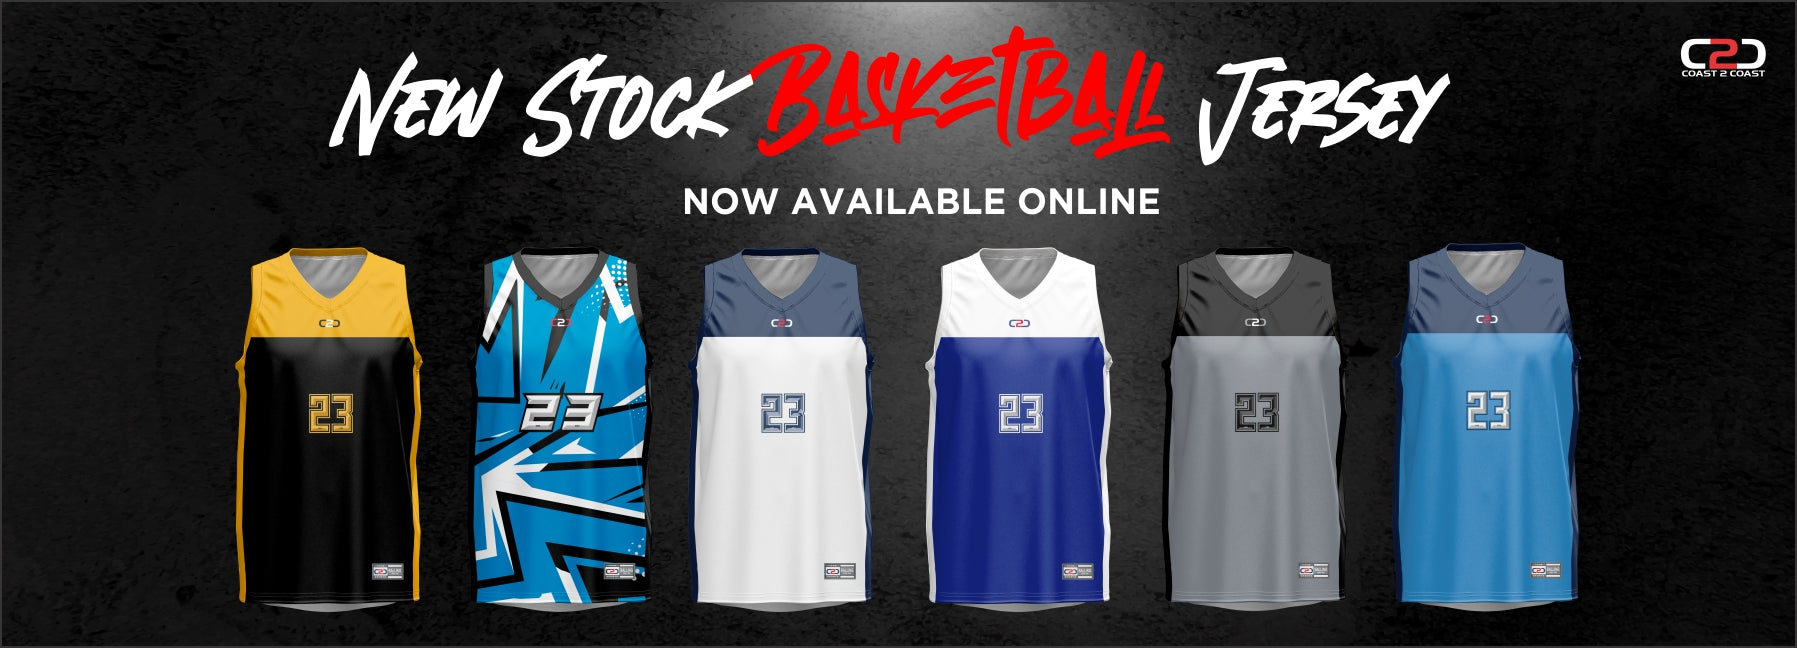 Stock Basketball Jerseys